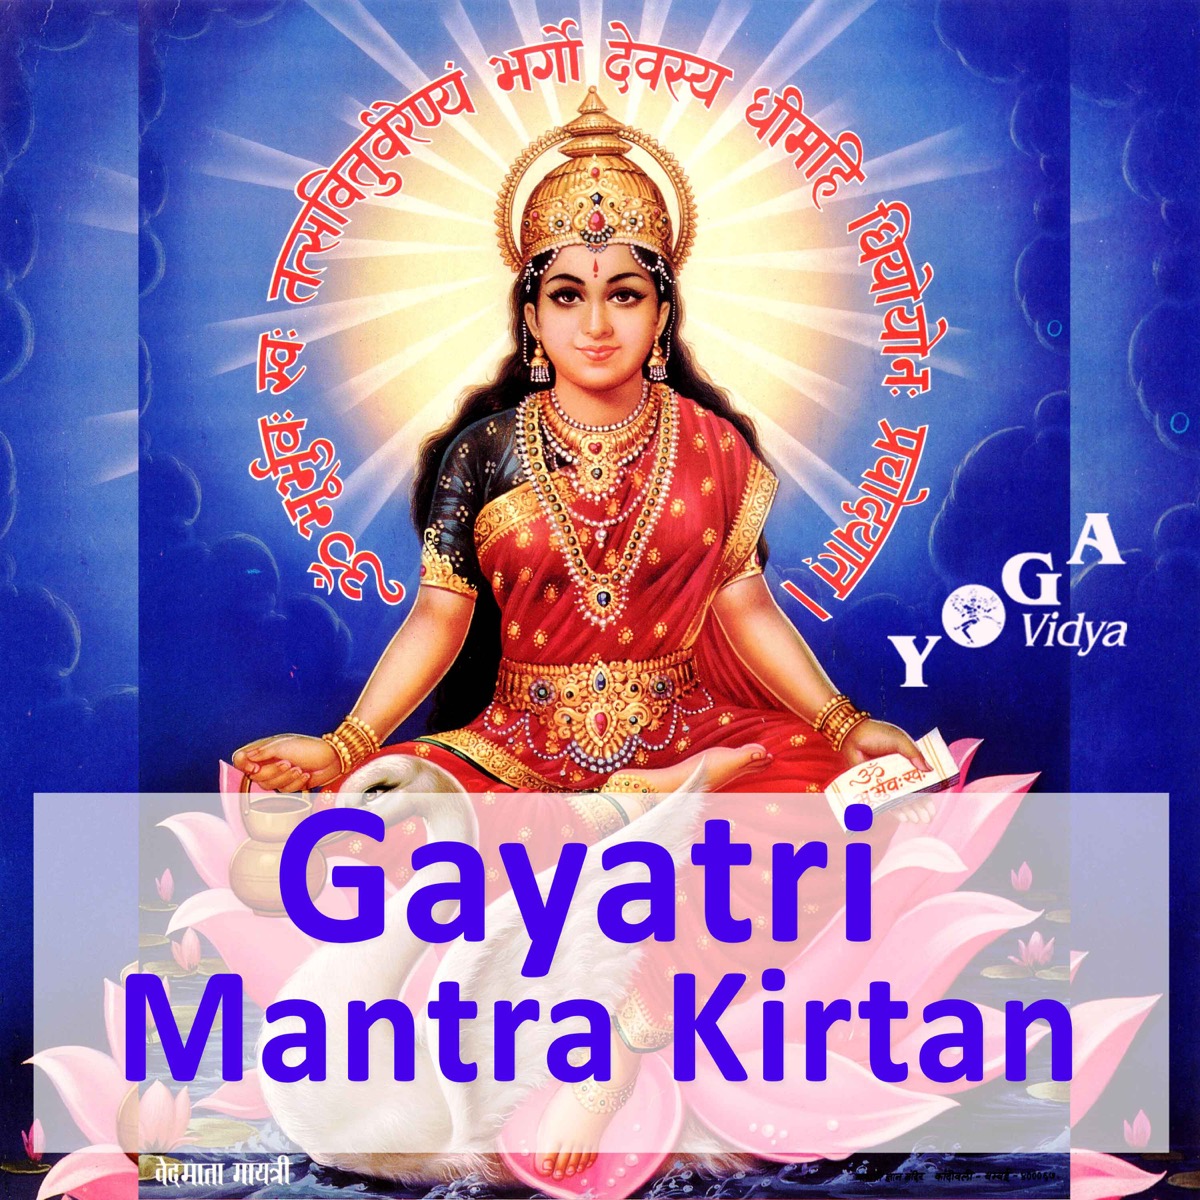 Gayatri Mantra Mit Chitra Hagit Noam Bharata Und Ishwara Gayatri My